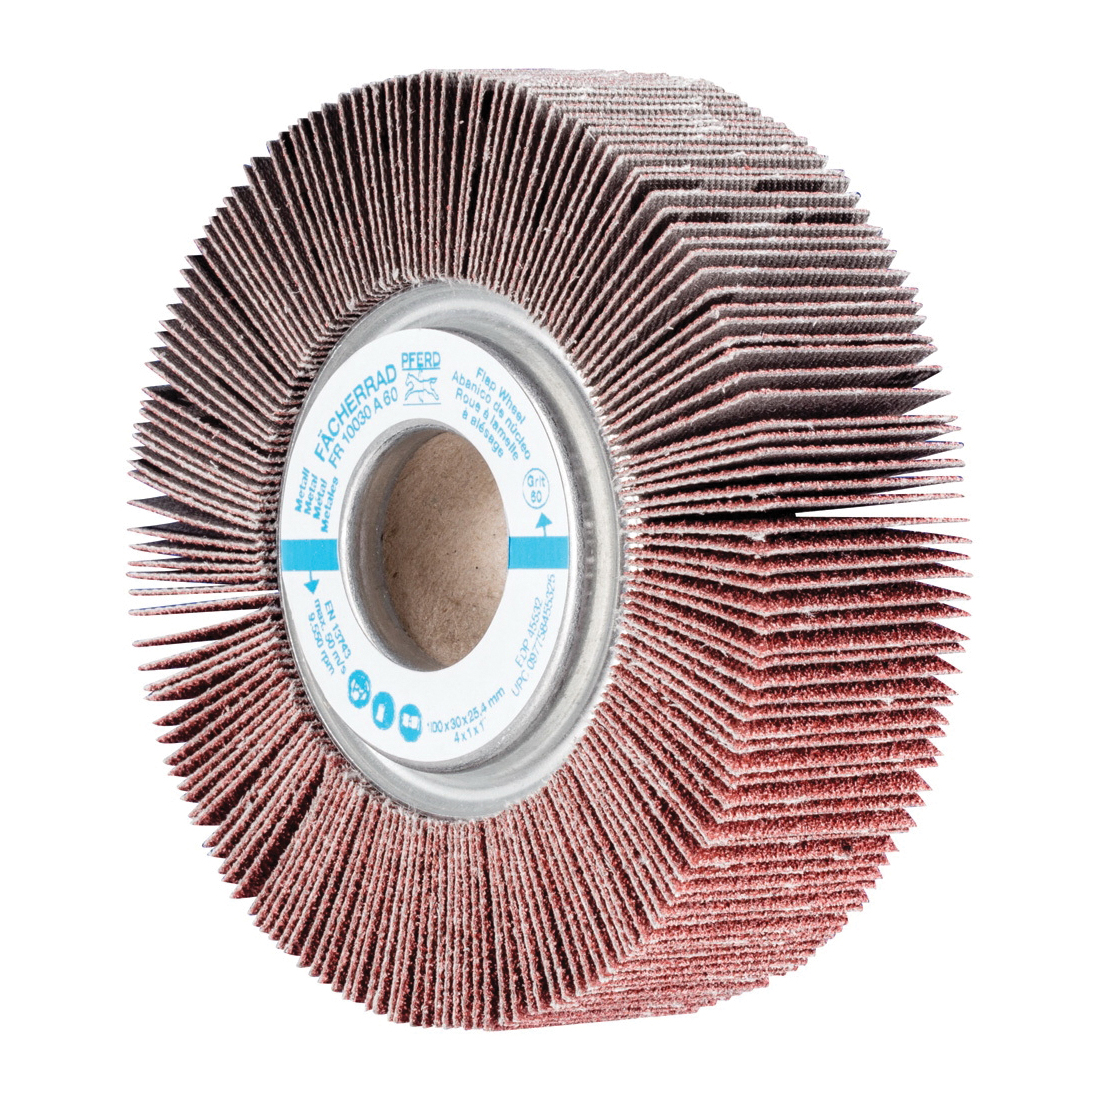 PFERD 45532 Unmounted Coated Flap Wheel, 4 in Dia, 1 in W Face, 60 Grit, Coarse Grade, Aluminum Oxide Abrasive